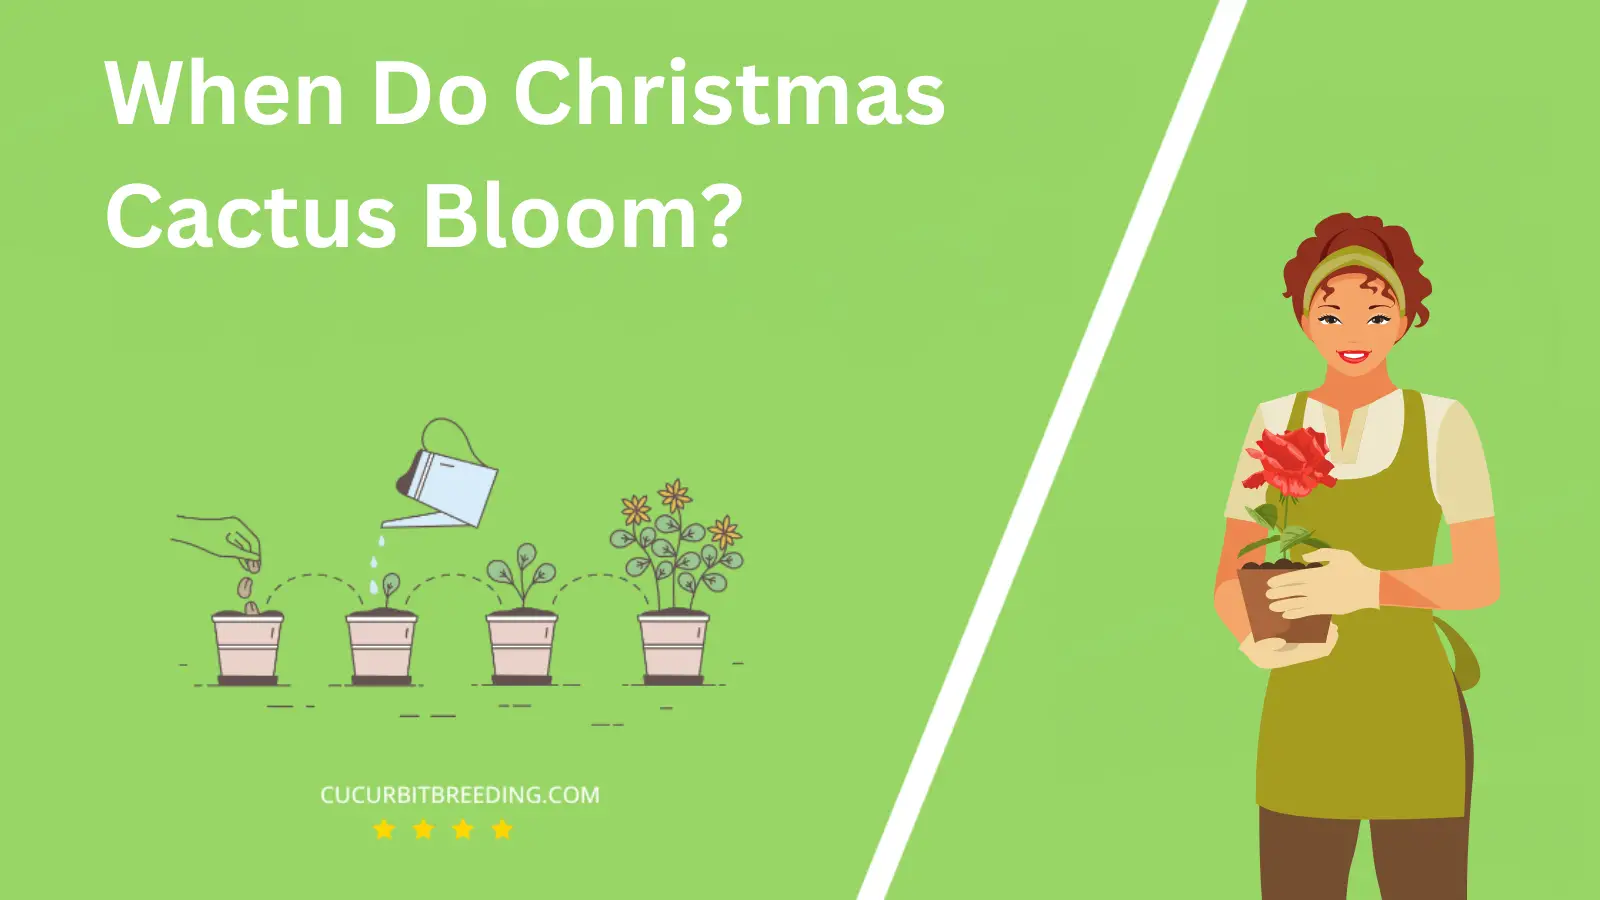 When Do Christmas Cactus Bloom?